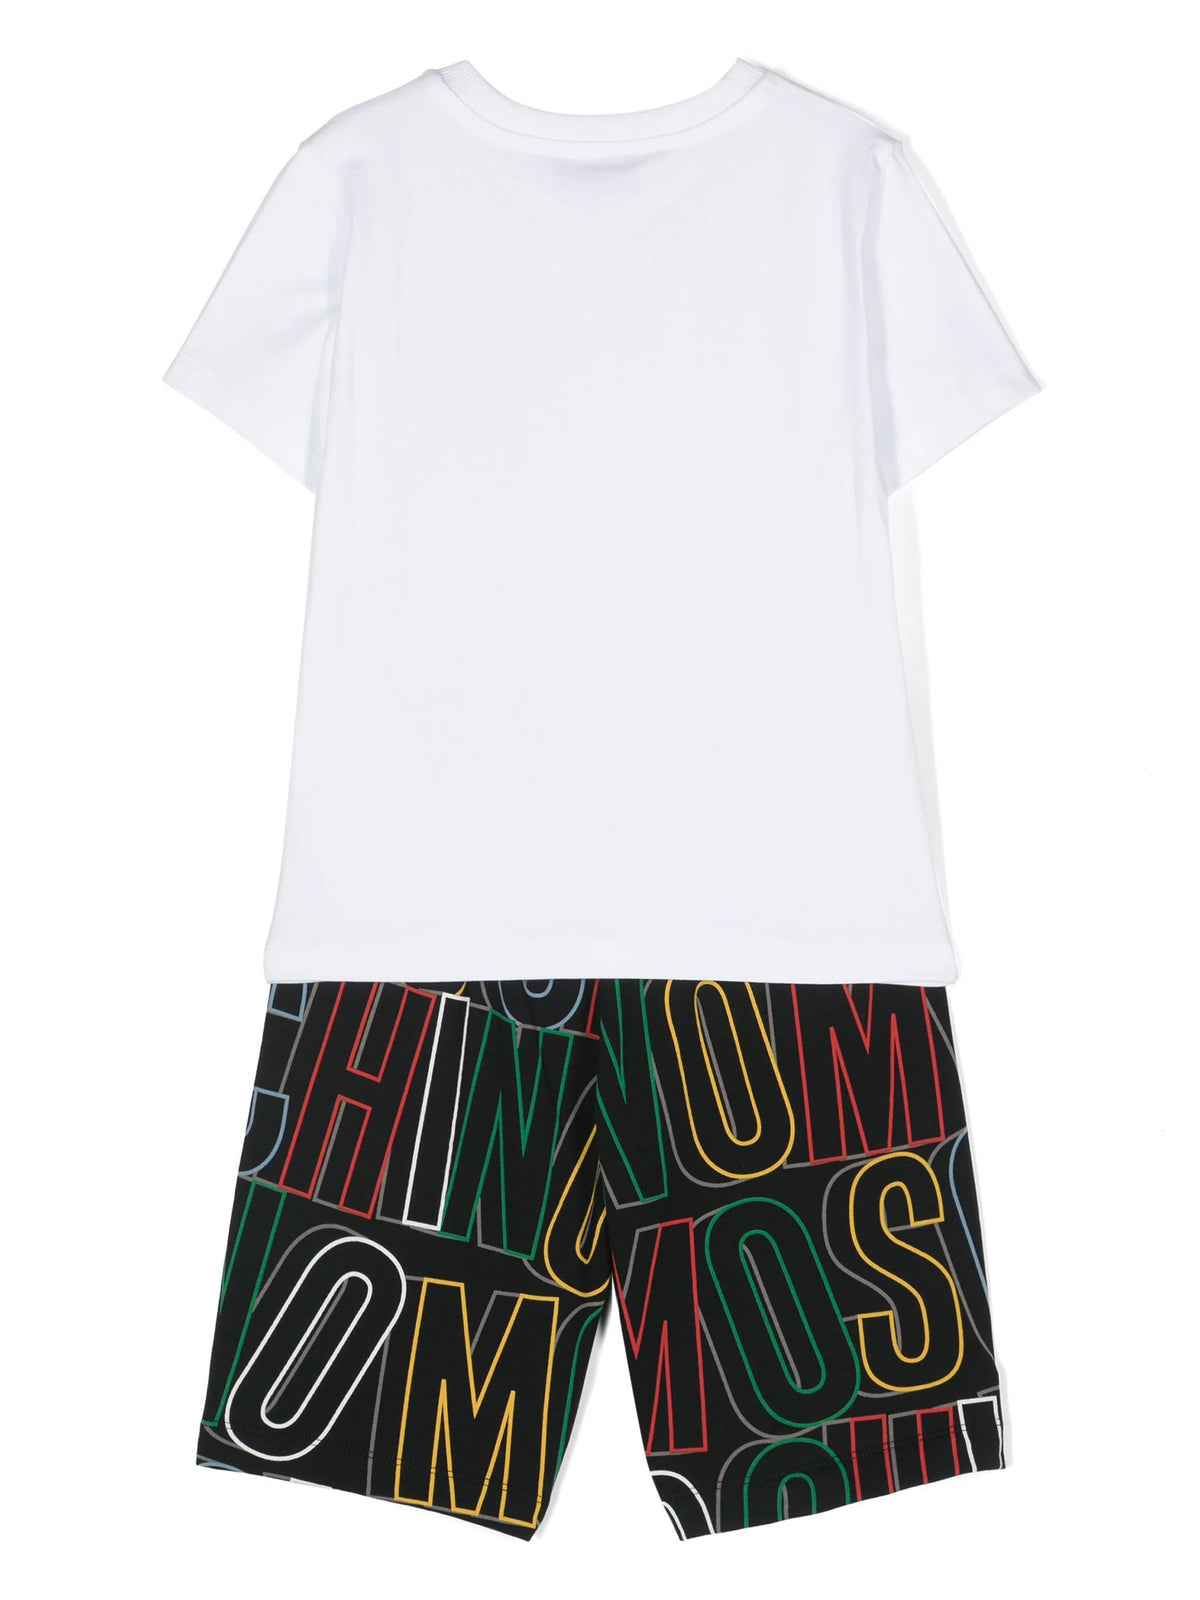 Moschino Kids logo-print shorts set